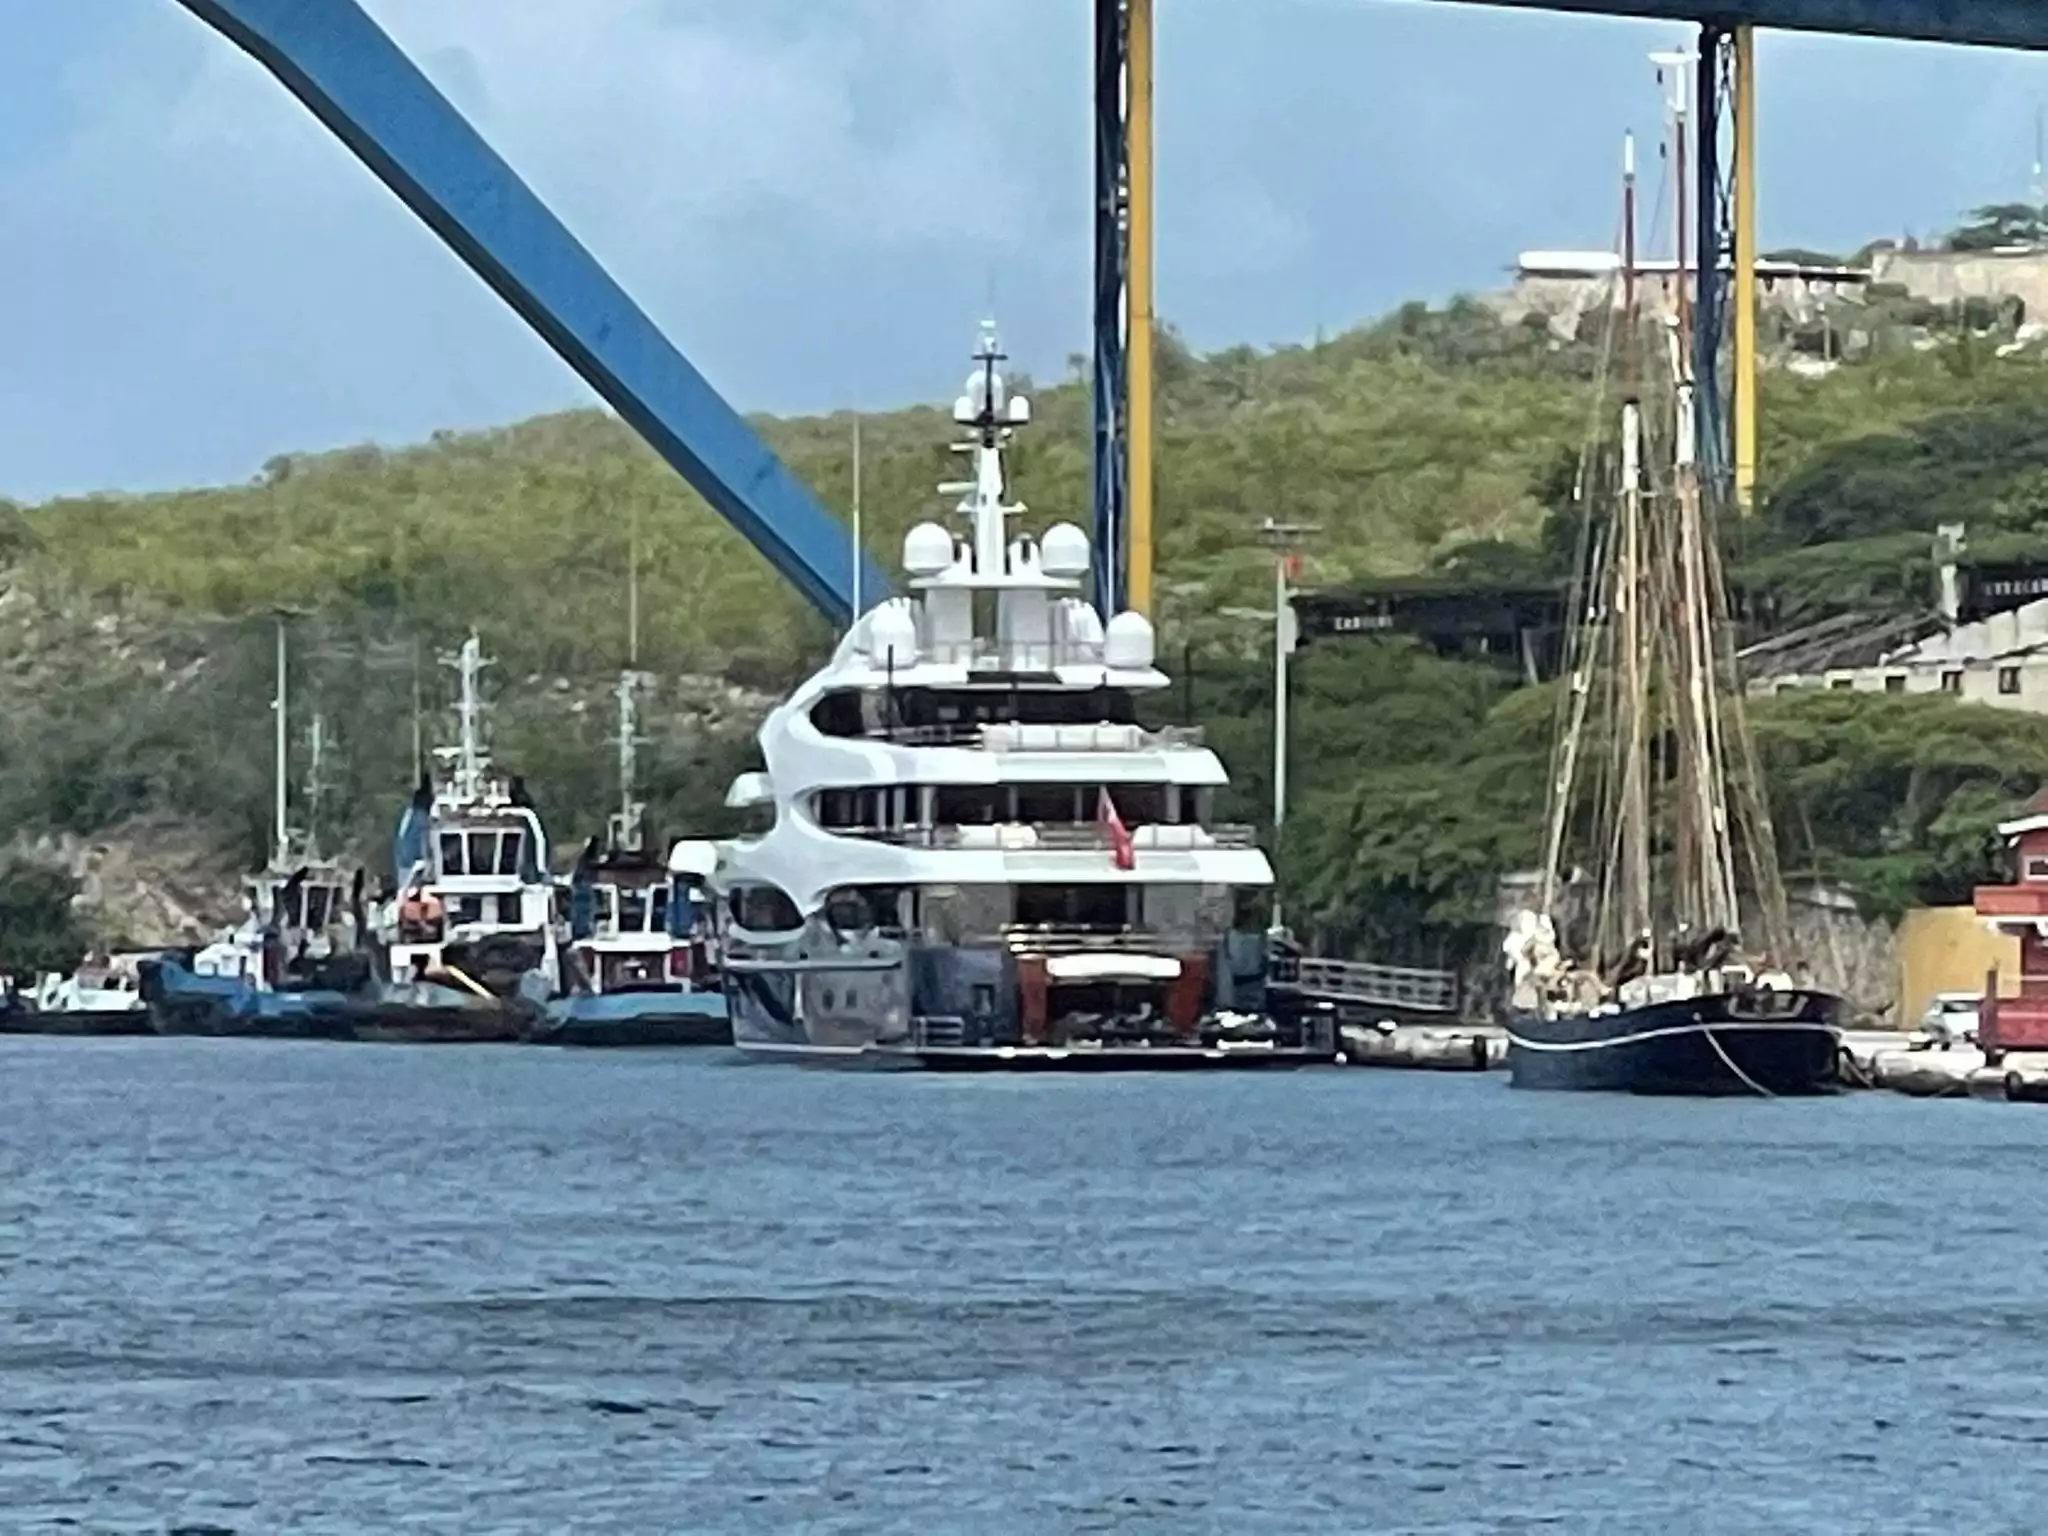 Le yacht Oceanco Barbara à Willemstad Curaçao